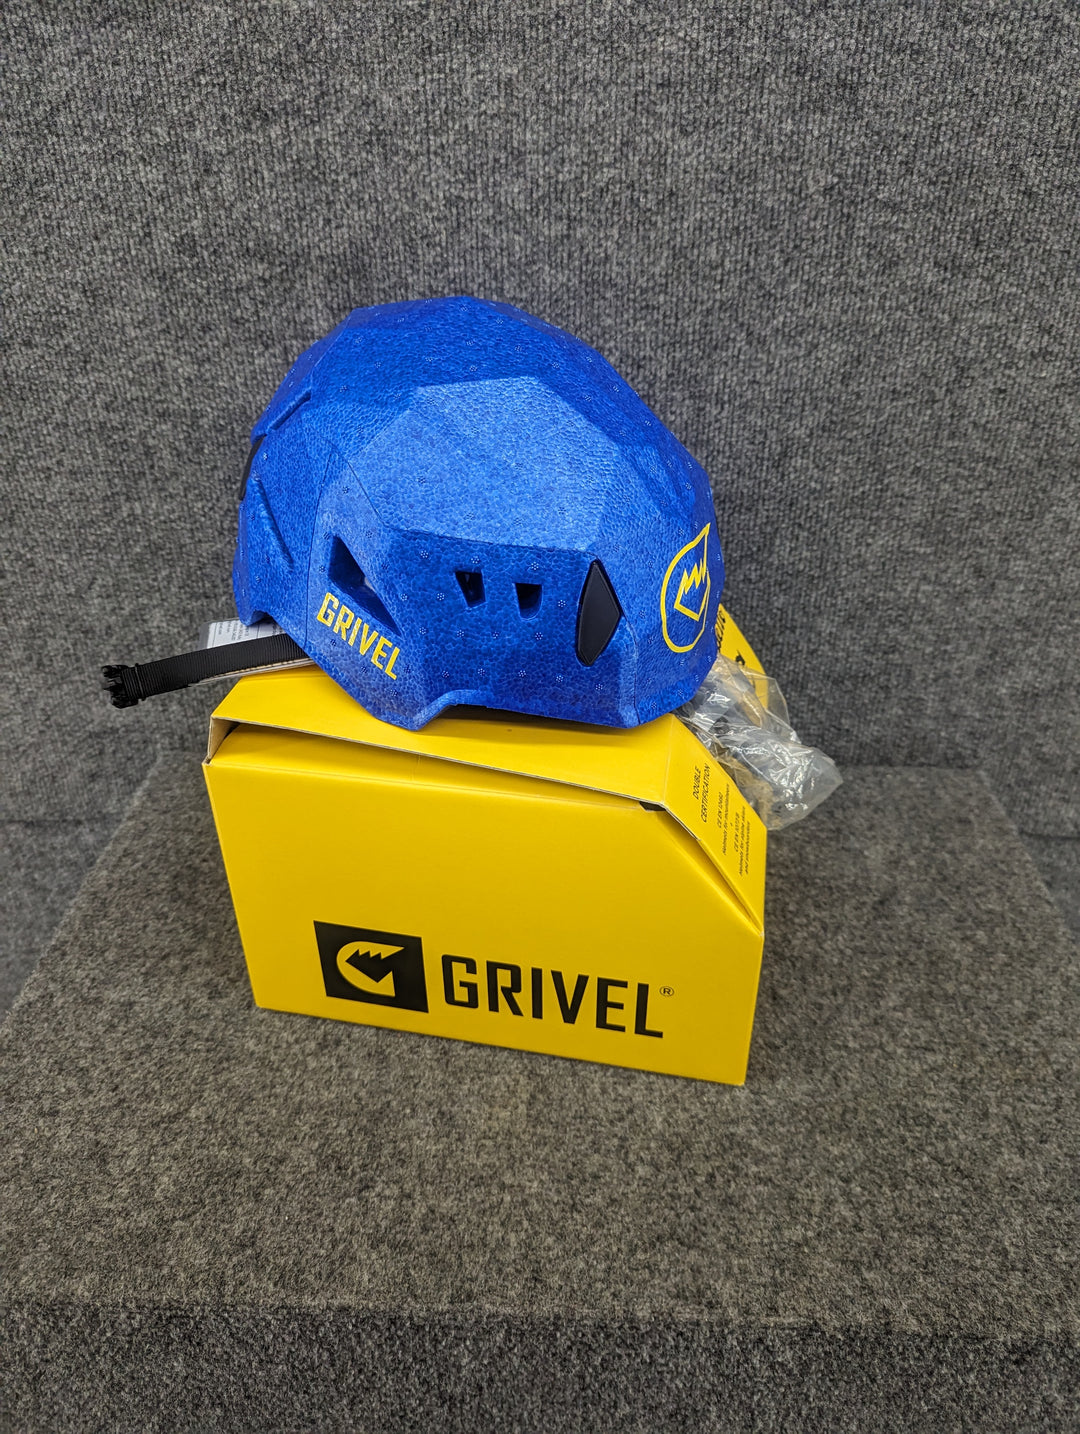 Grivel Size OneSizeFitsAll Climbing Helmet